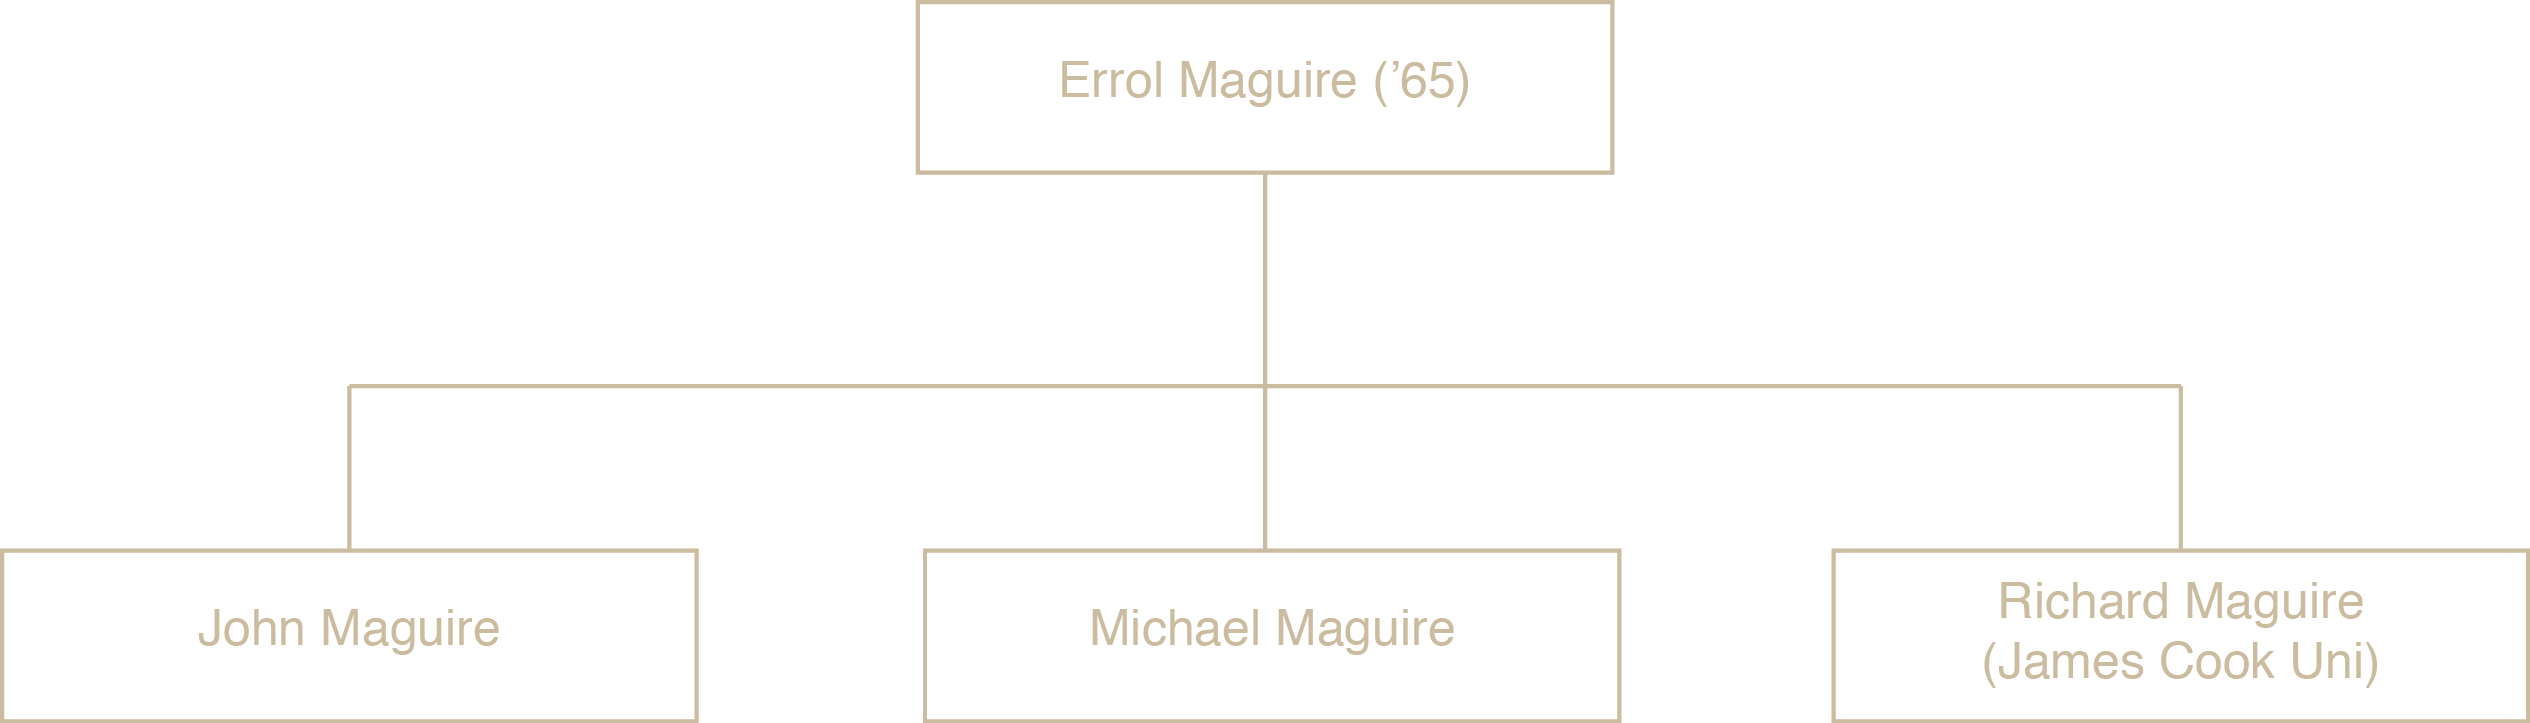 Maguire family tree